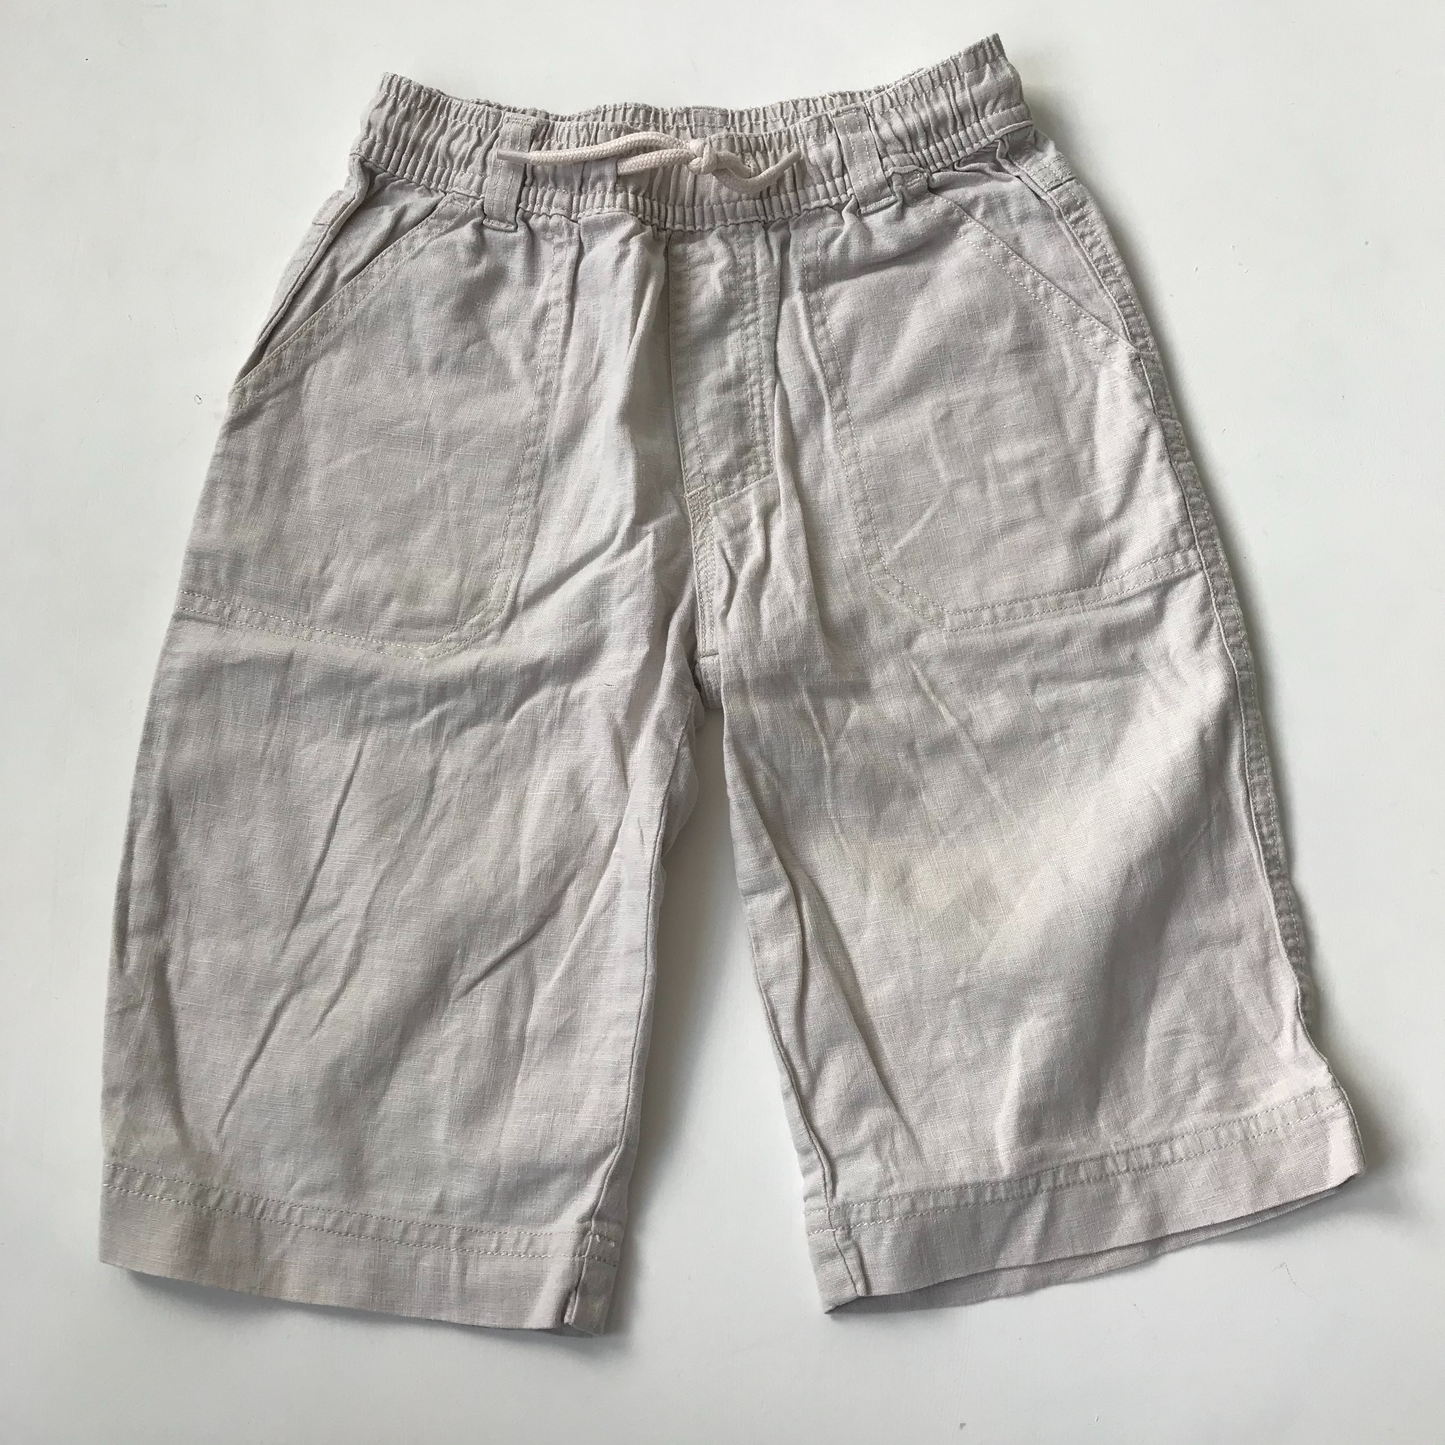 Shorts - White Sand Colour - Age 6